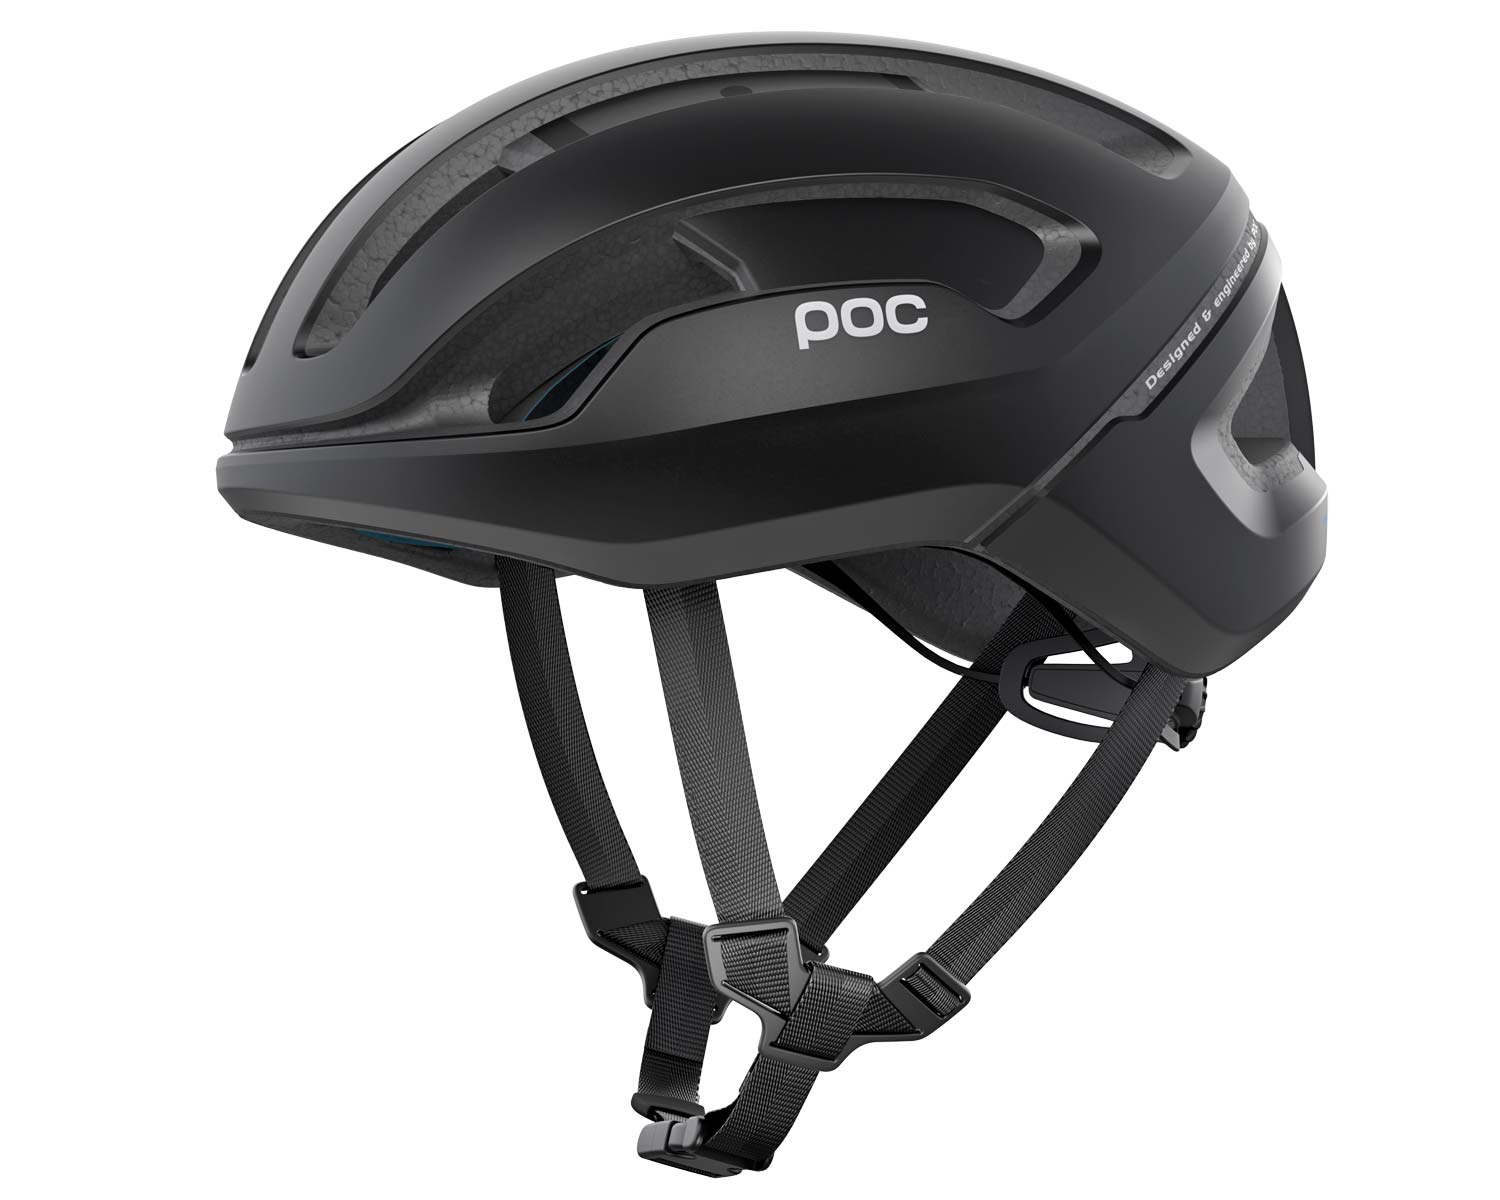 POC Omne Eternal solar-powered helmet with integrated lighting, side